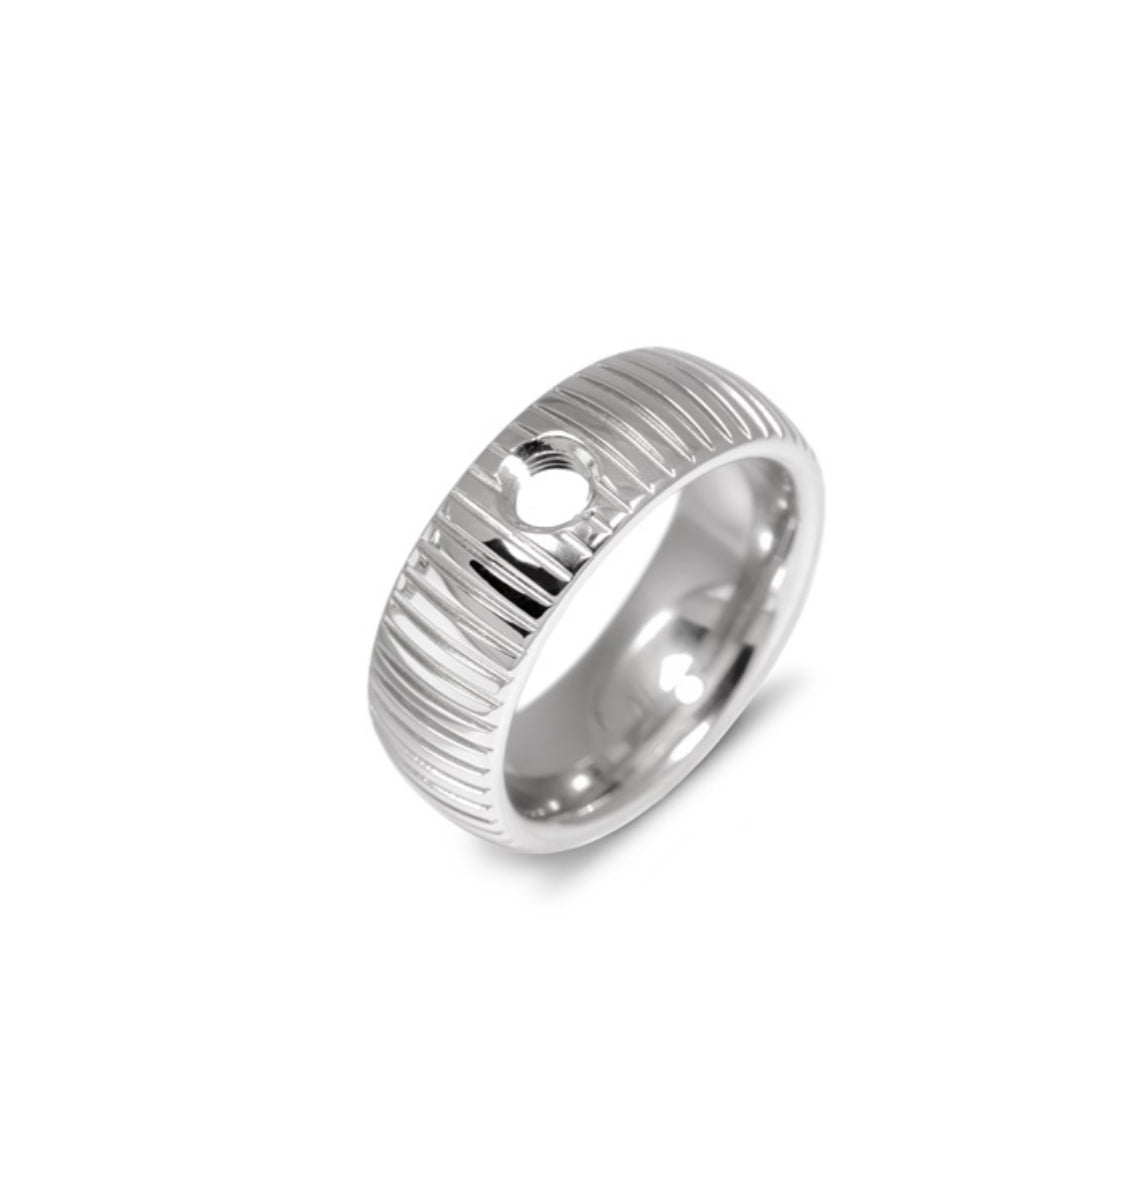 MelanO Ring Vivid Striped  - Silver or Rose Gold